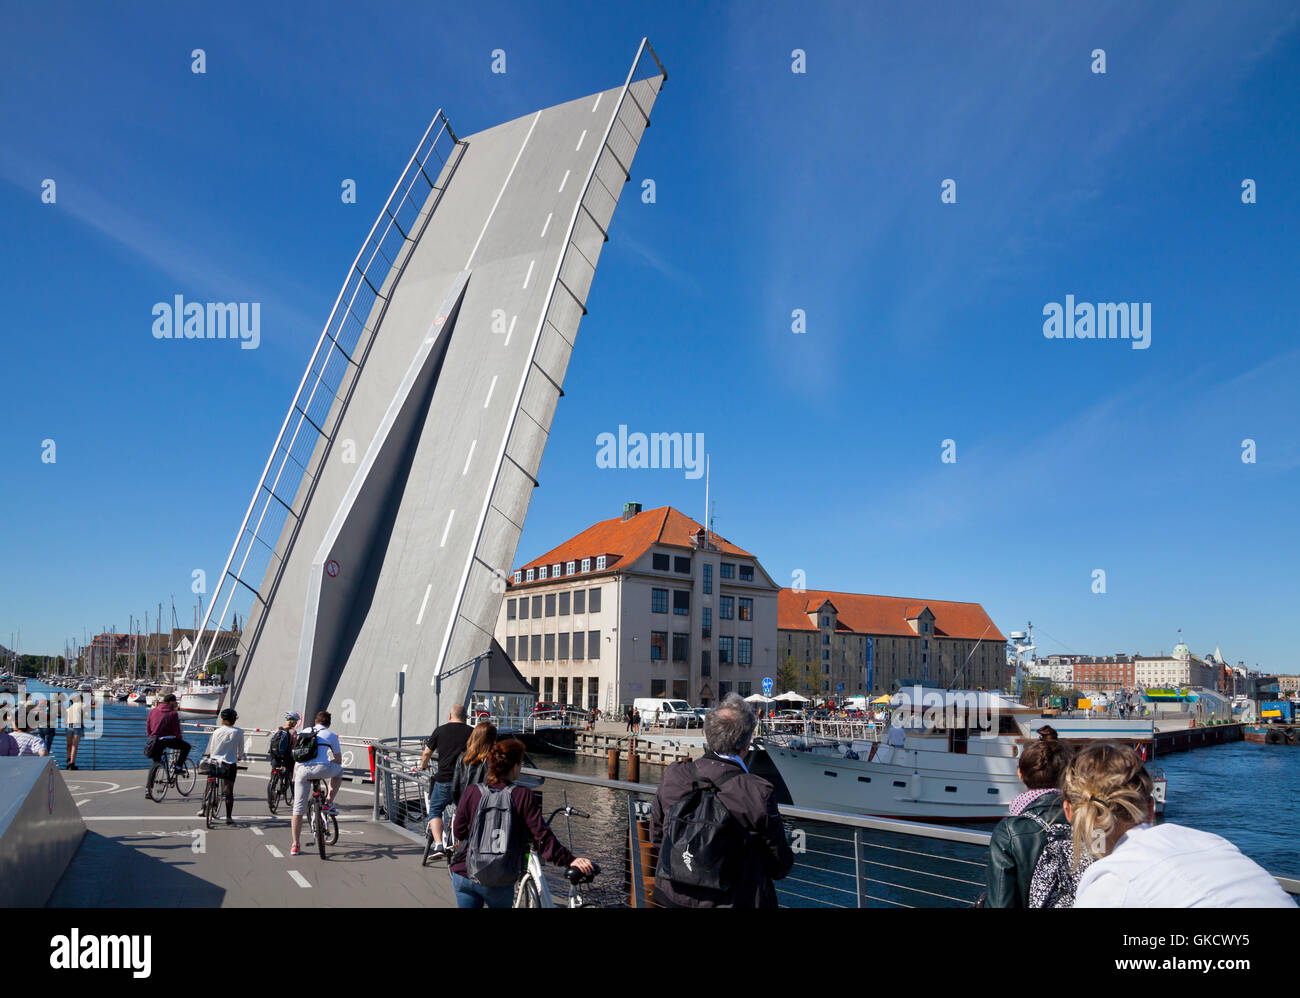 The Trangrav Bridge,Trangravsbroen, a Butterfly 3-Way cyclist and pedestrian bridge across Christianshavn Canal opens for a boat. Copenhagen, Denmark. Stock Photo